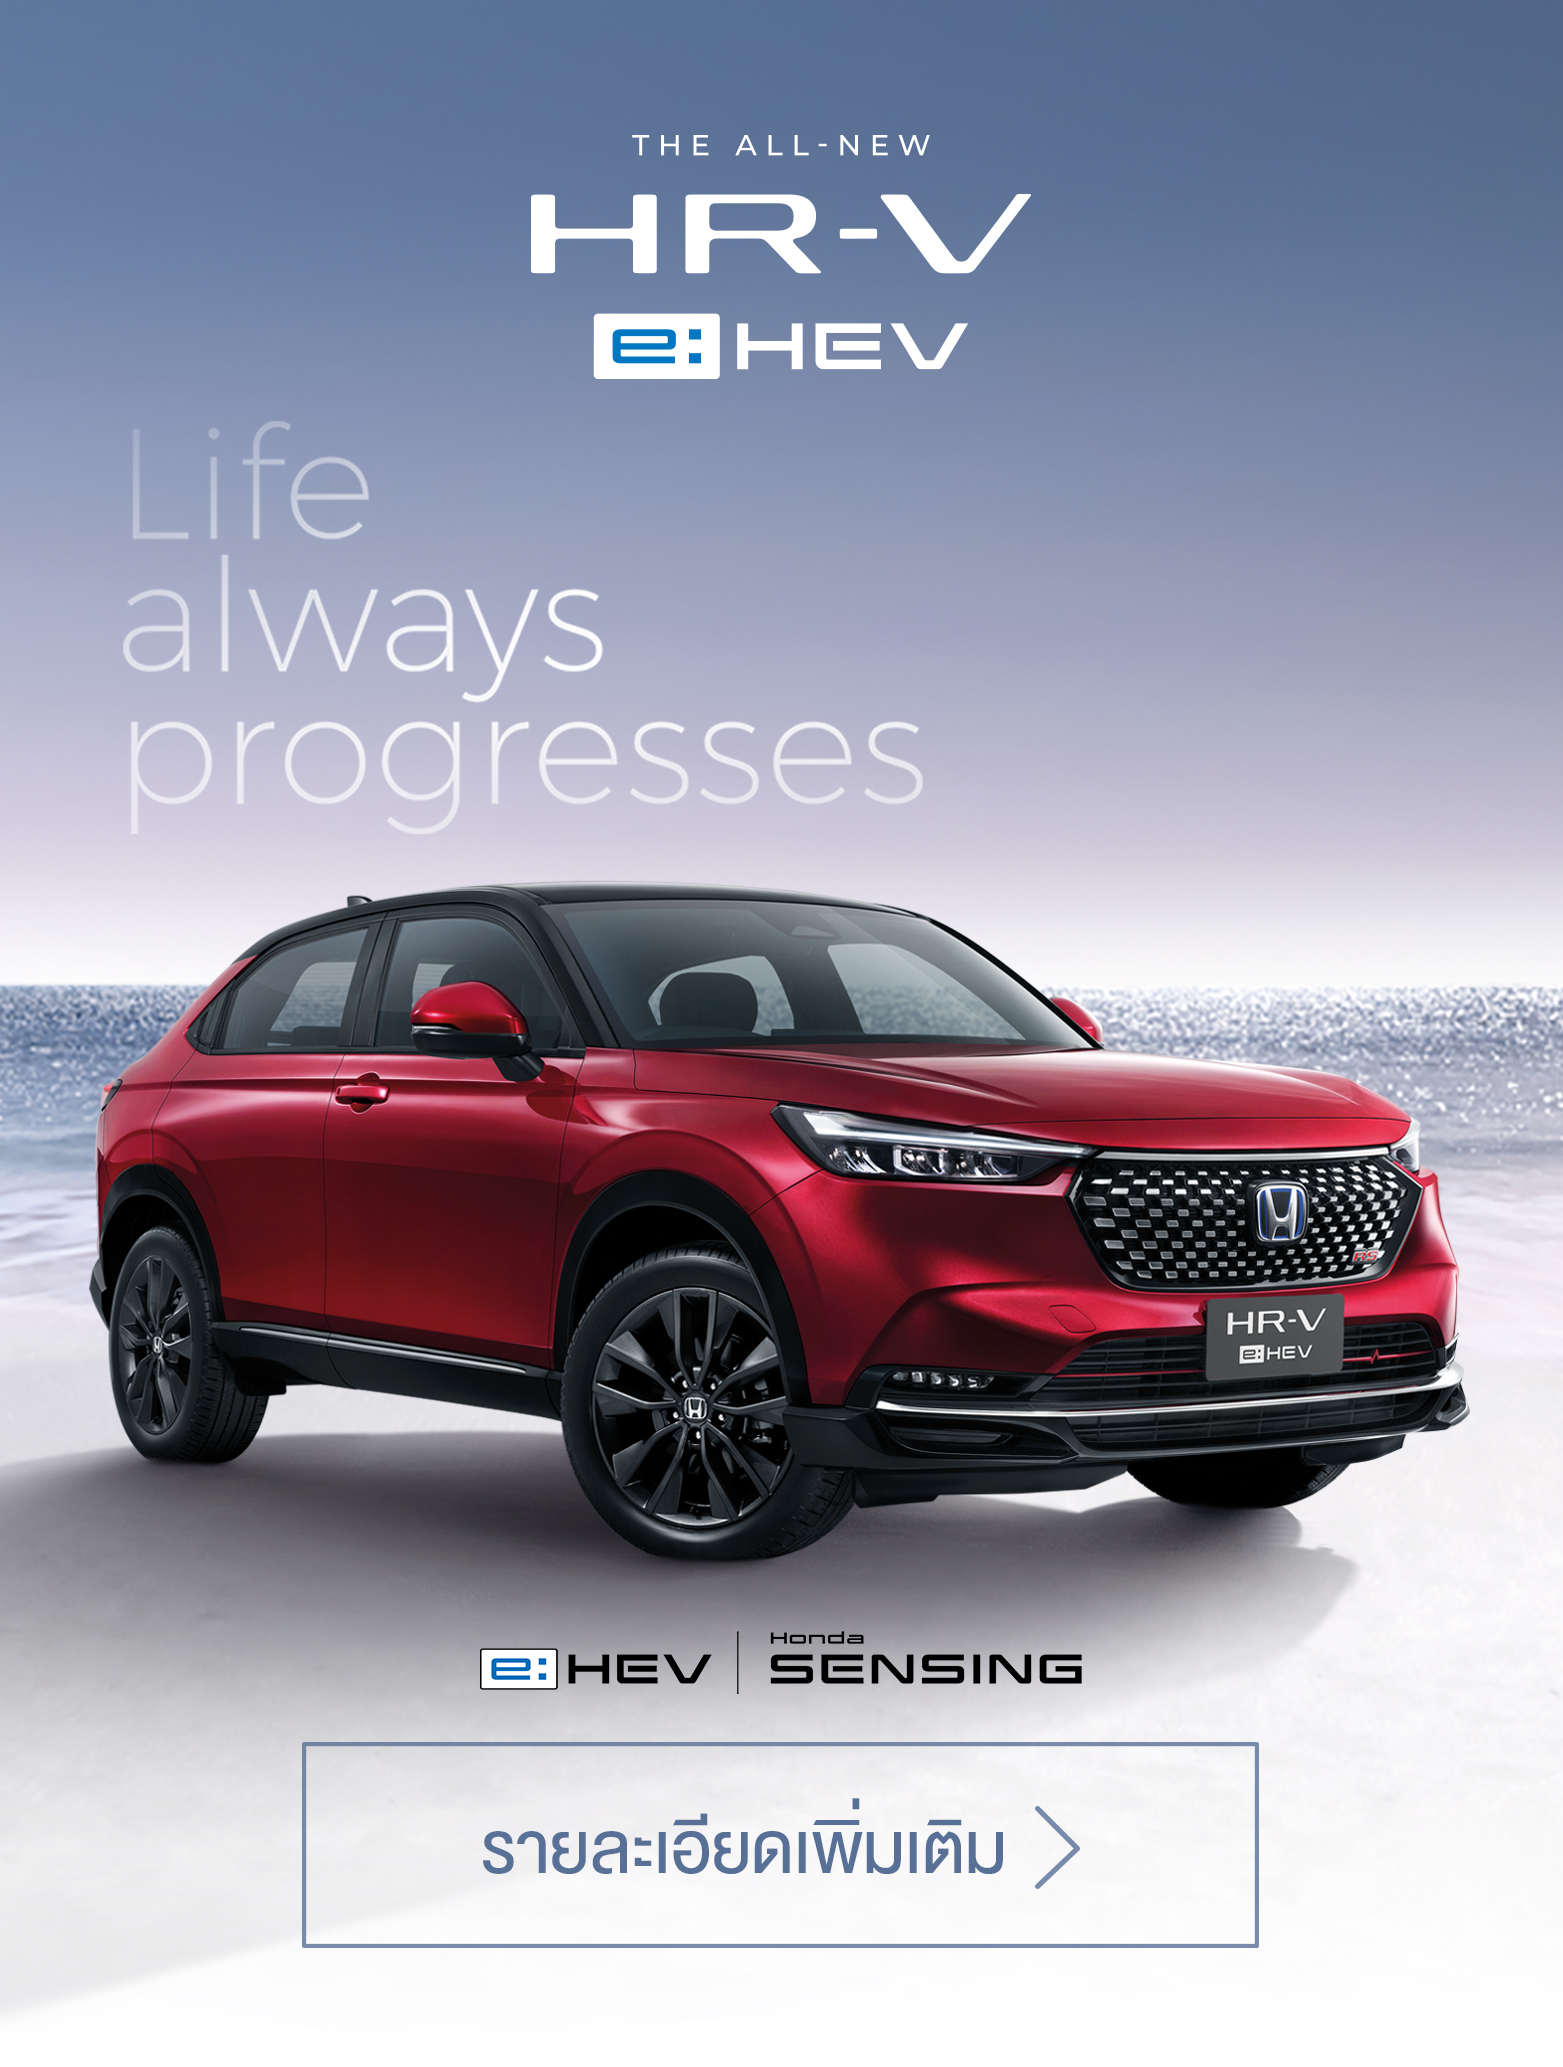 The All-new Honda HR-V e:HEV